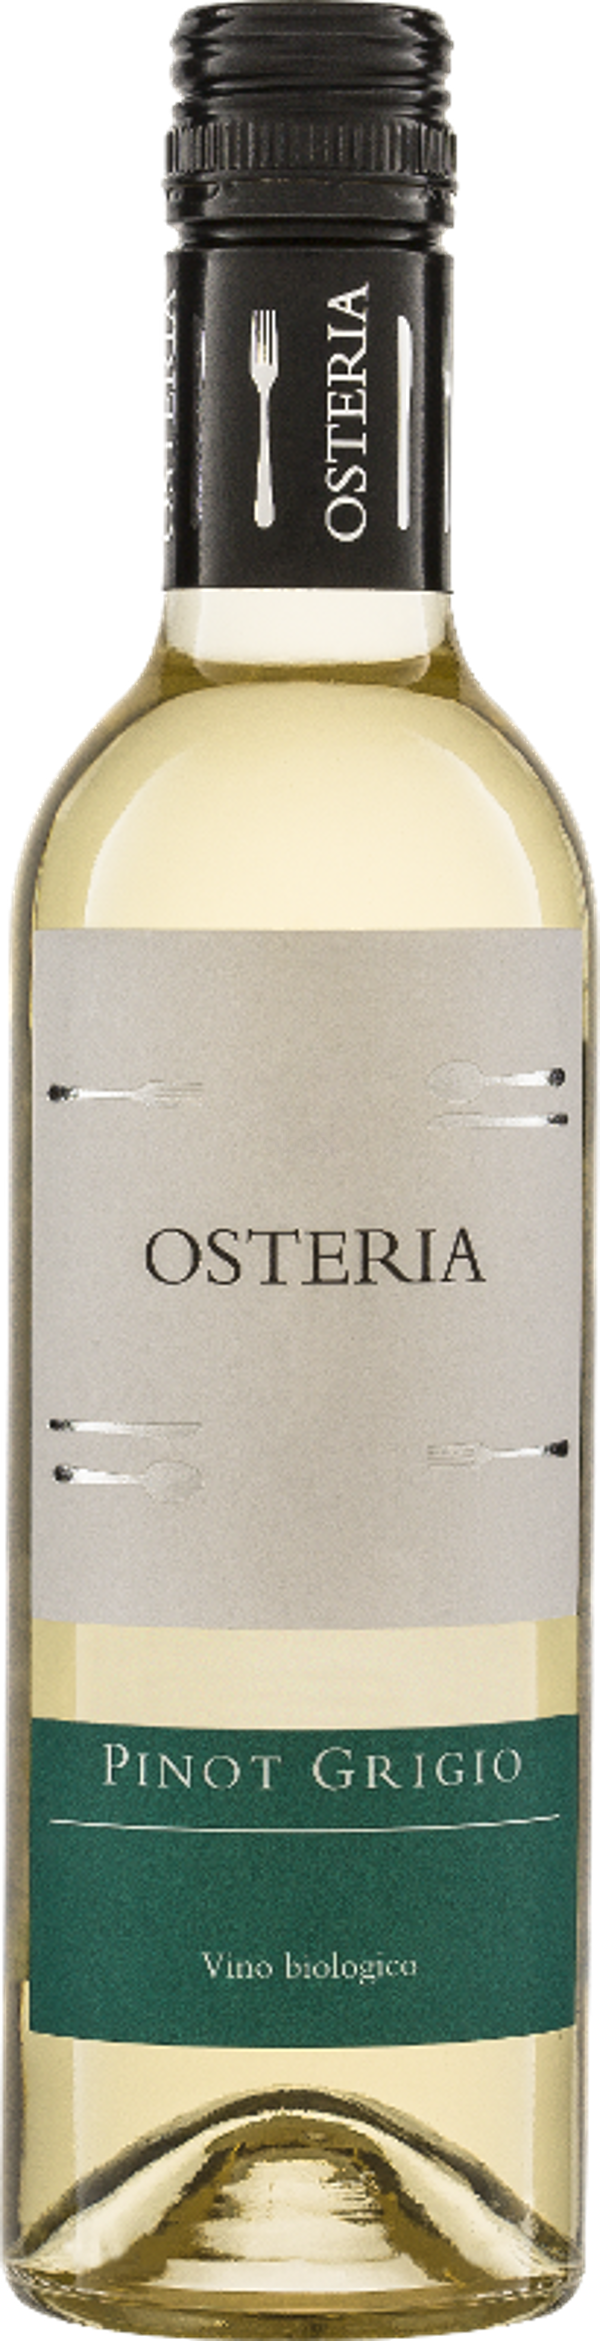 Produktfoto zu OSTERIA Pinot Grigio IGT Demeter 0,375l